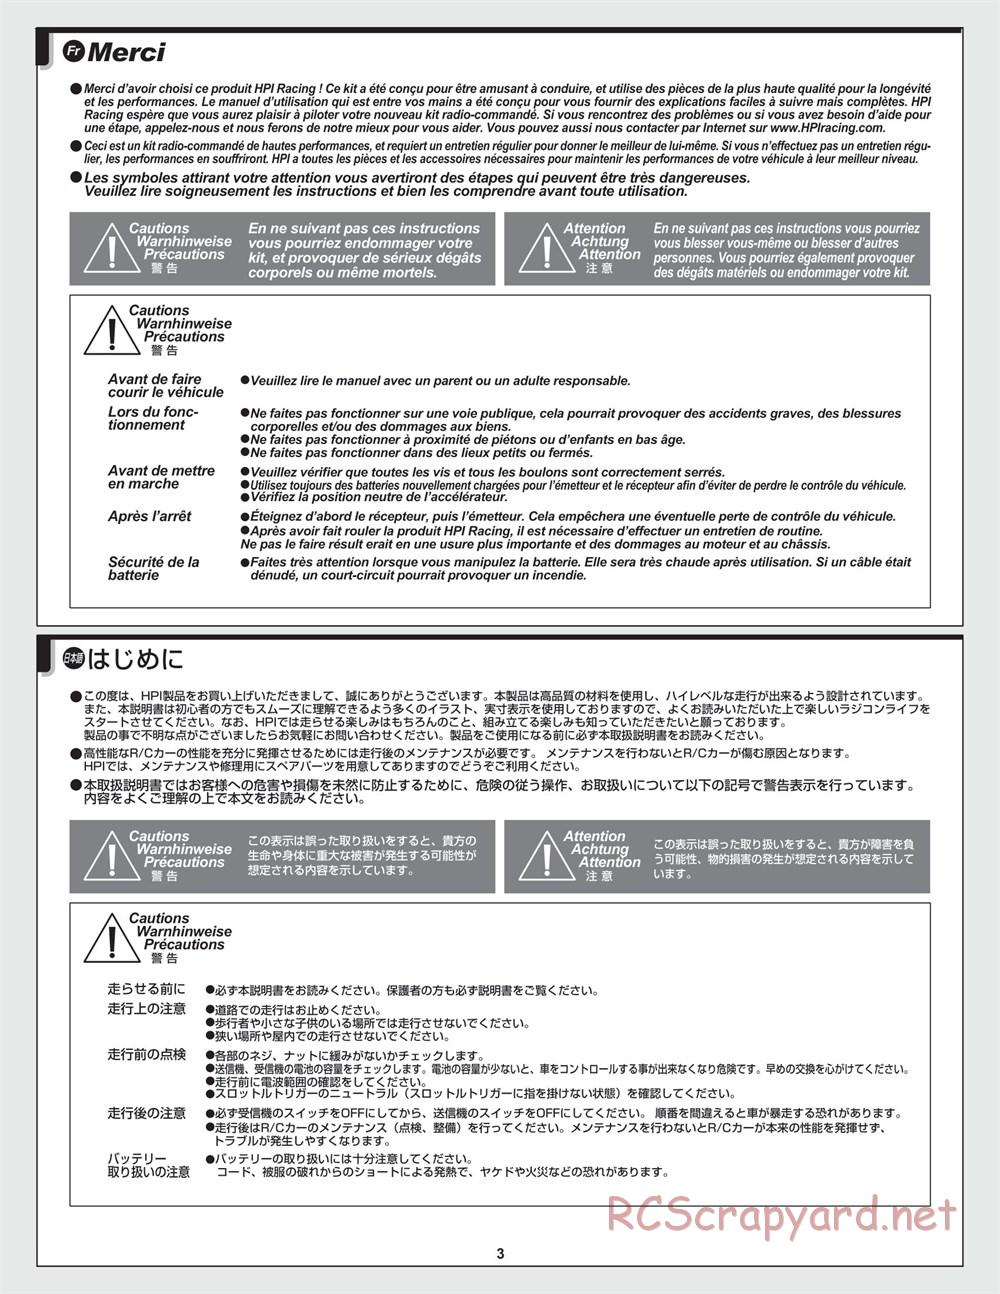 HPI - Jumpshot MT - Manual - Page 3